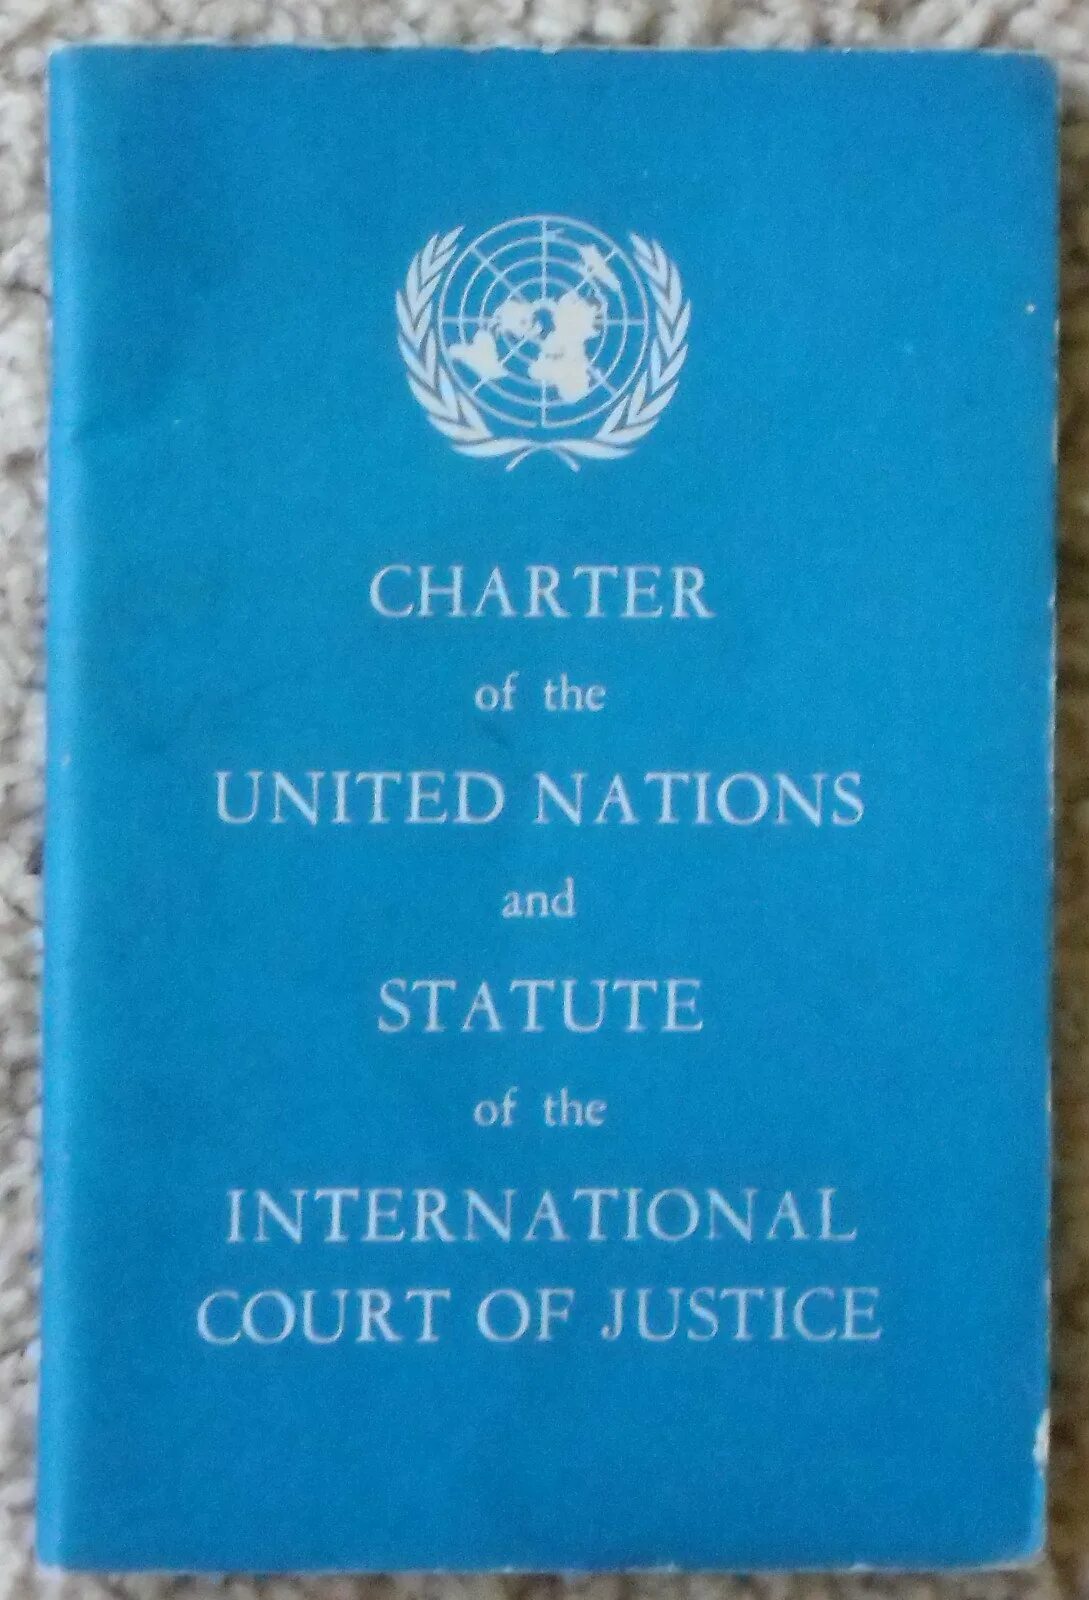 Устав оон 51 7. Устав организации Объединенных наций 1945 г. Устав ООН книга. Статут международного суда ООН. Устав международного суда ООН.